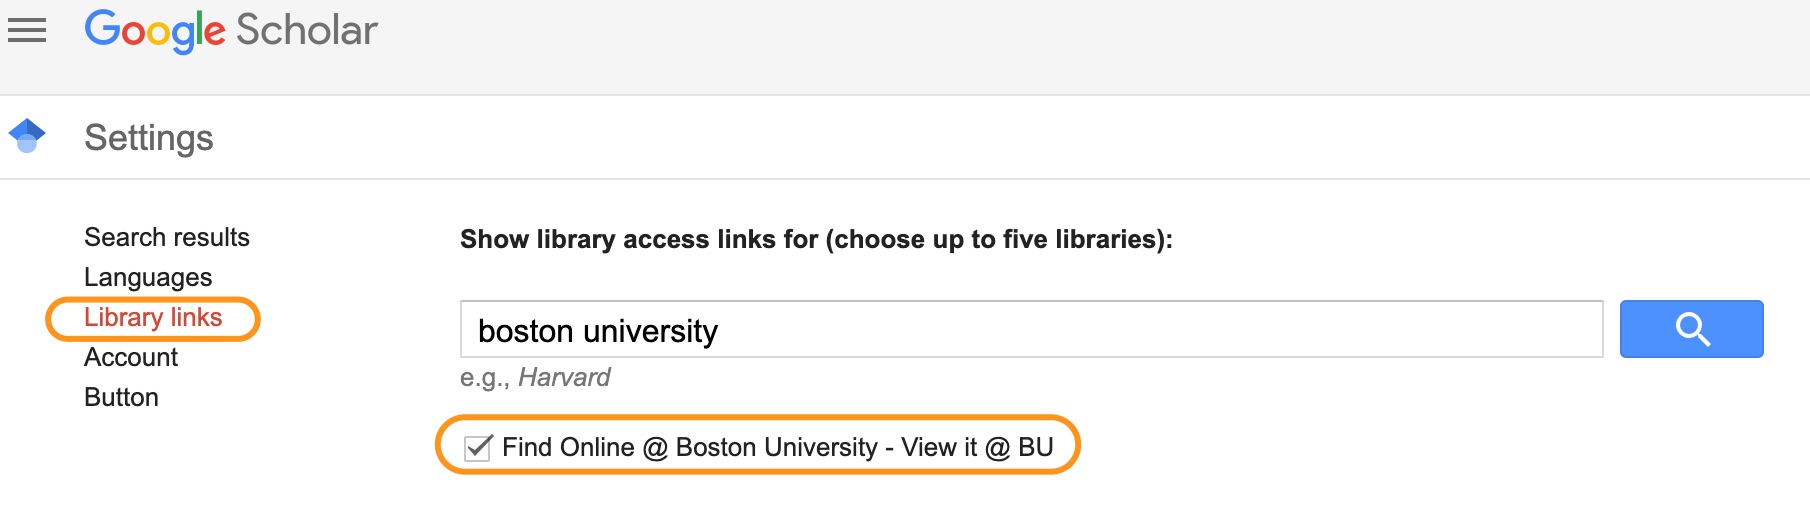 google scholar library links setting